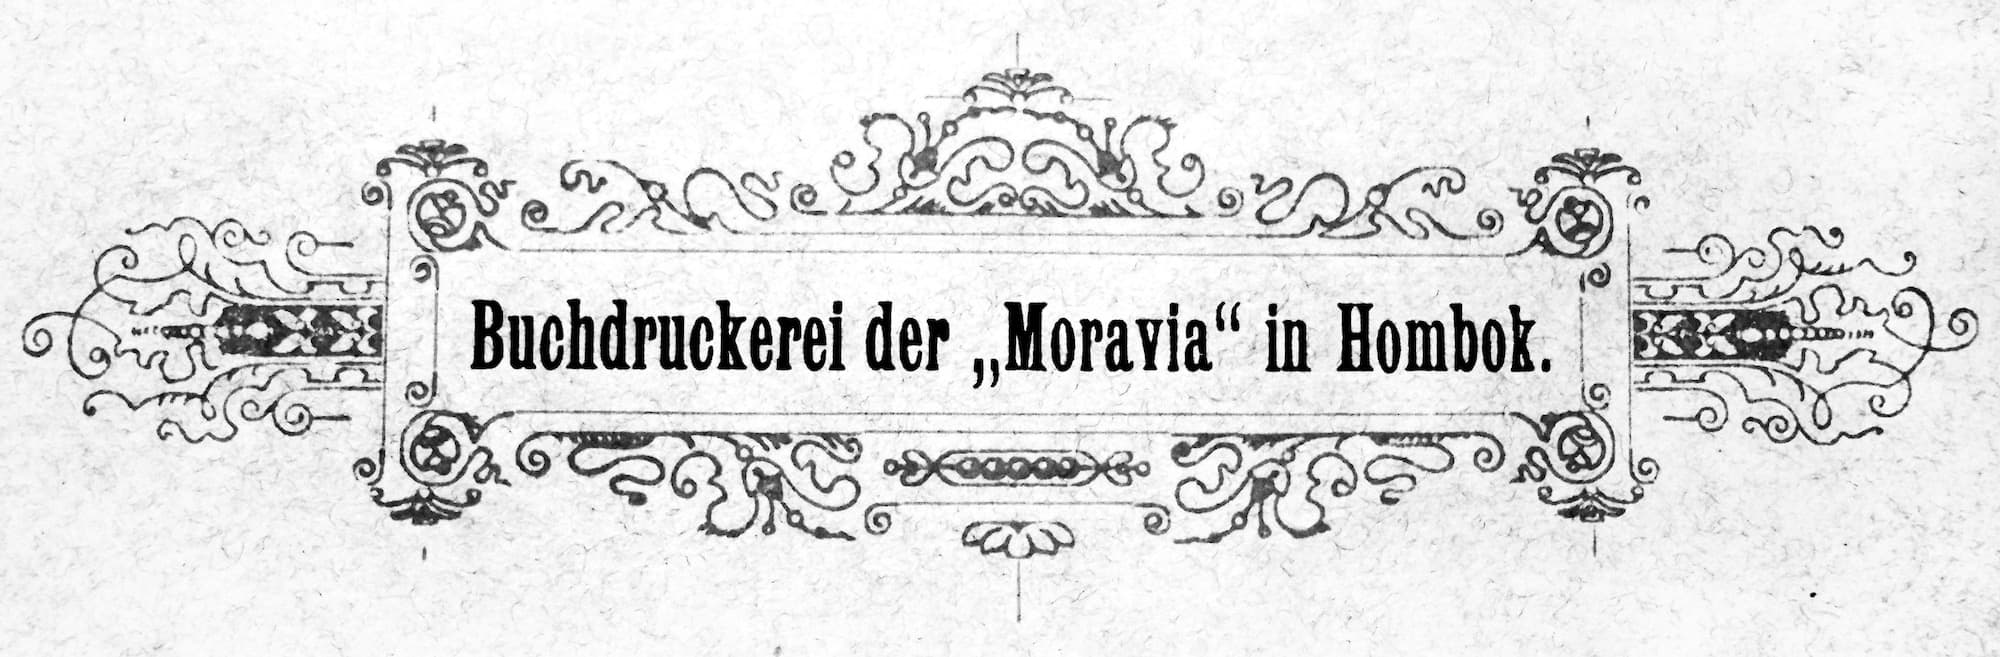 Knihtisk v Moravii v Hlubočkách